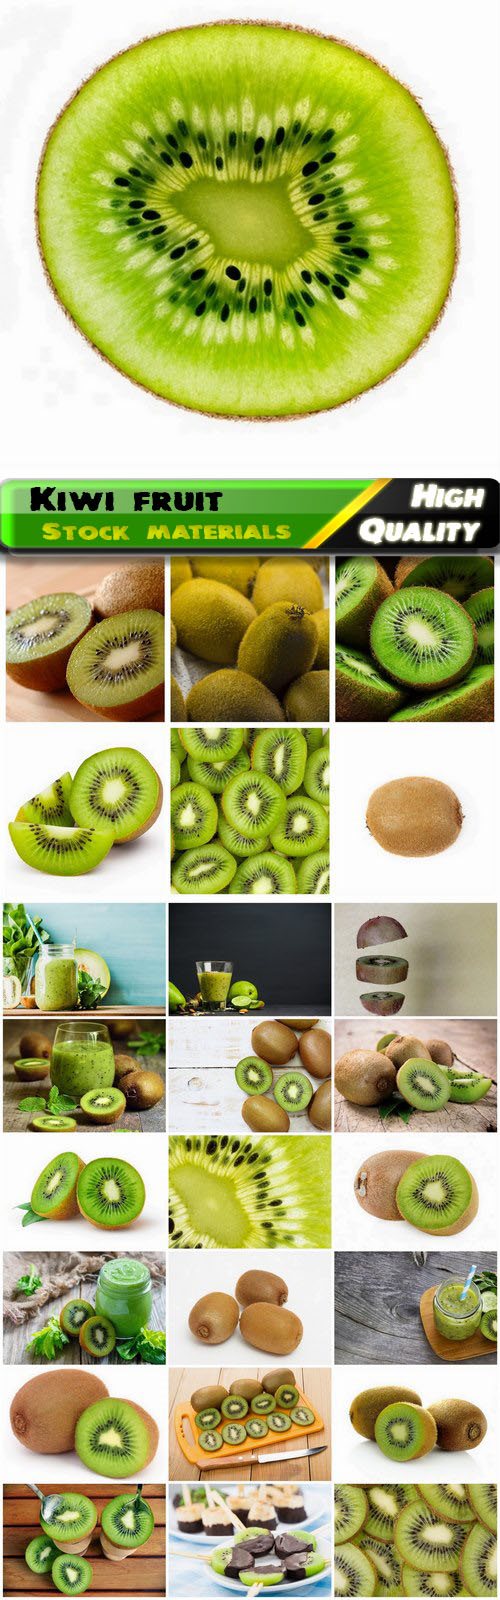 Kiwi fruit of the genus Actinidia 25 HQ Jpg